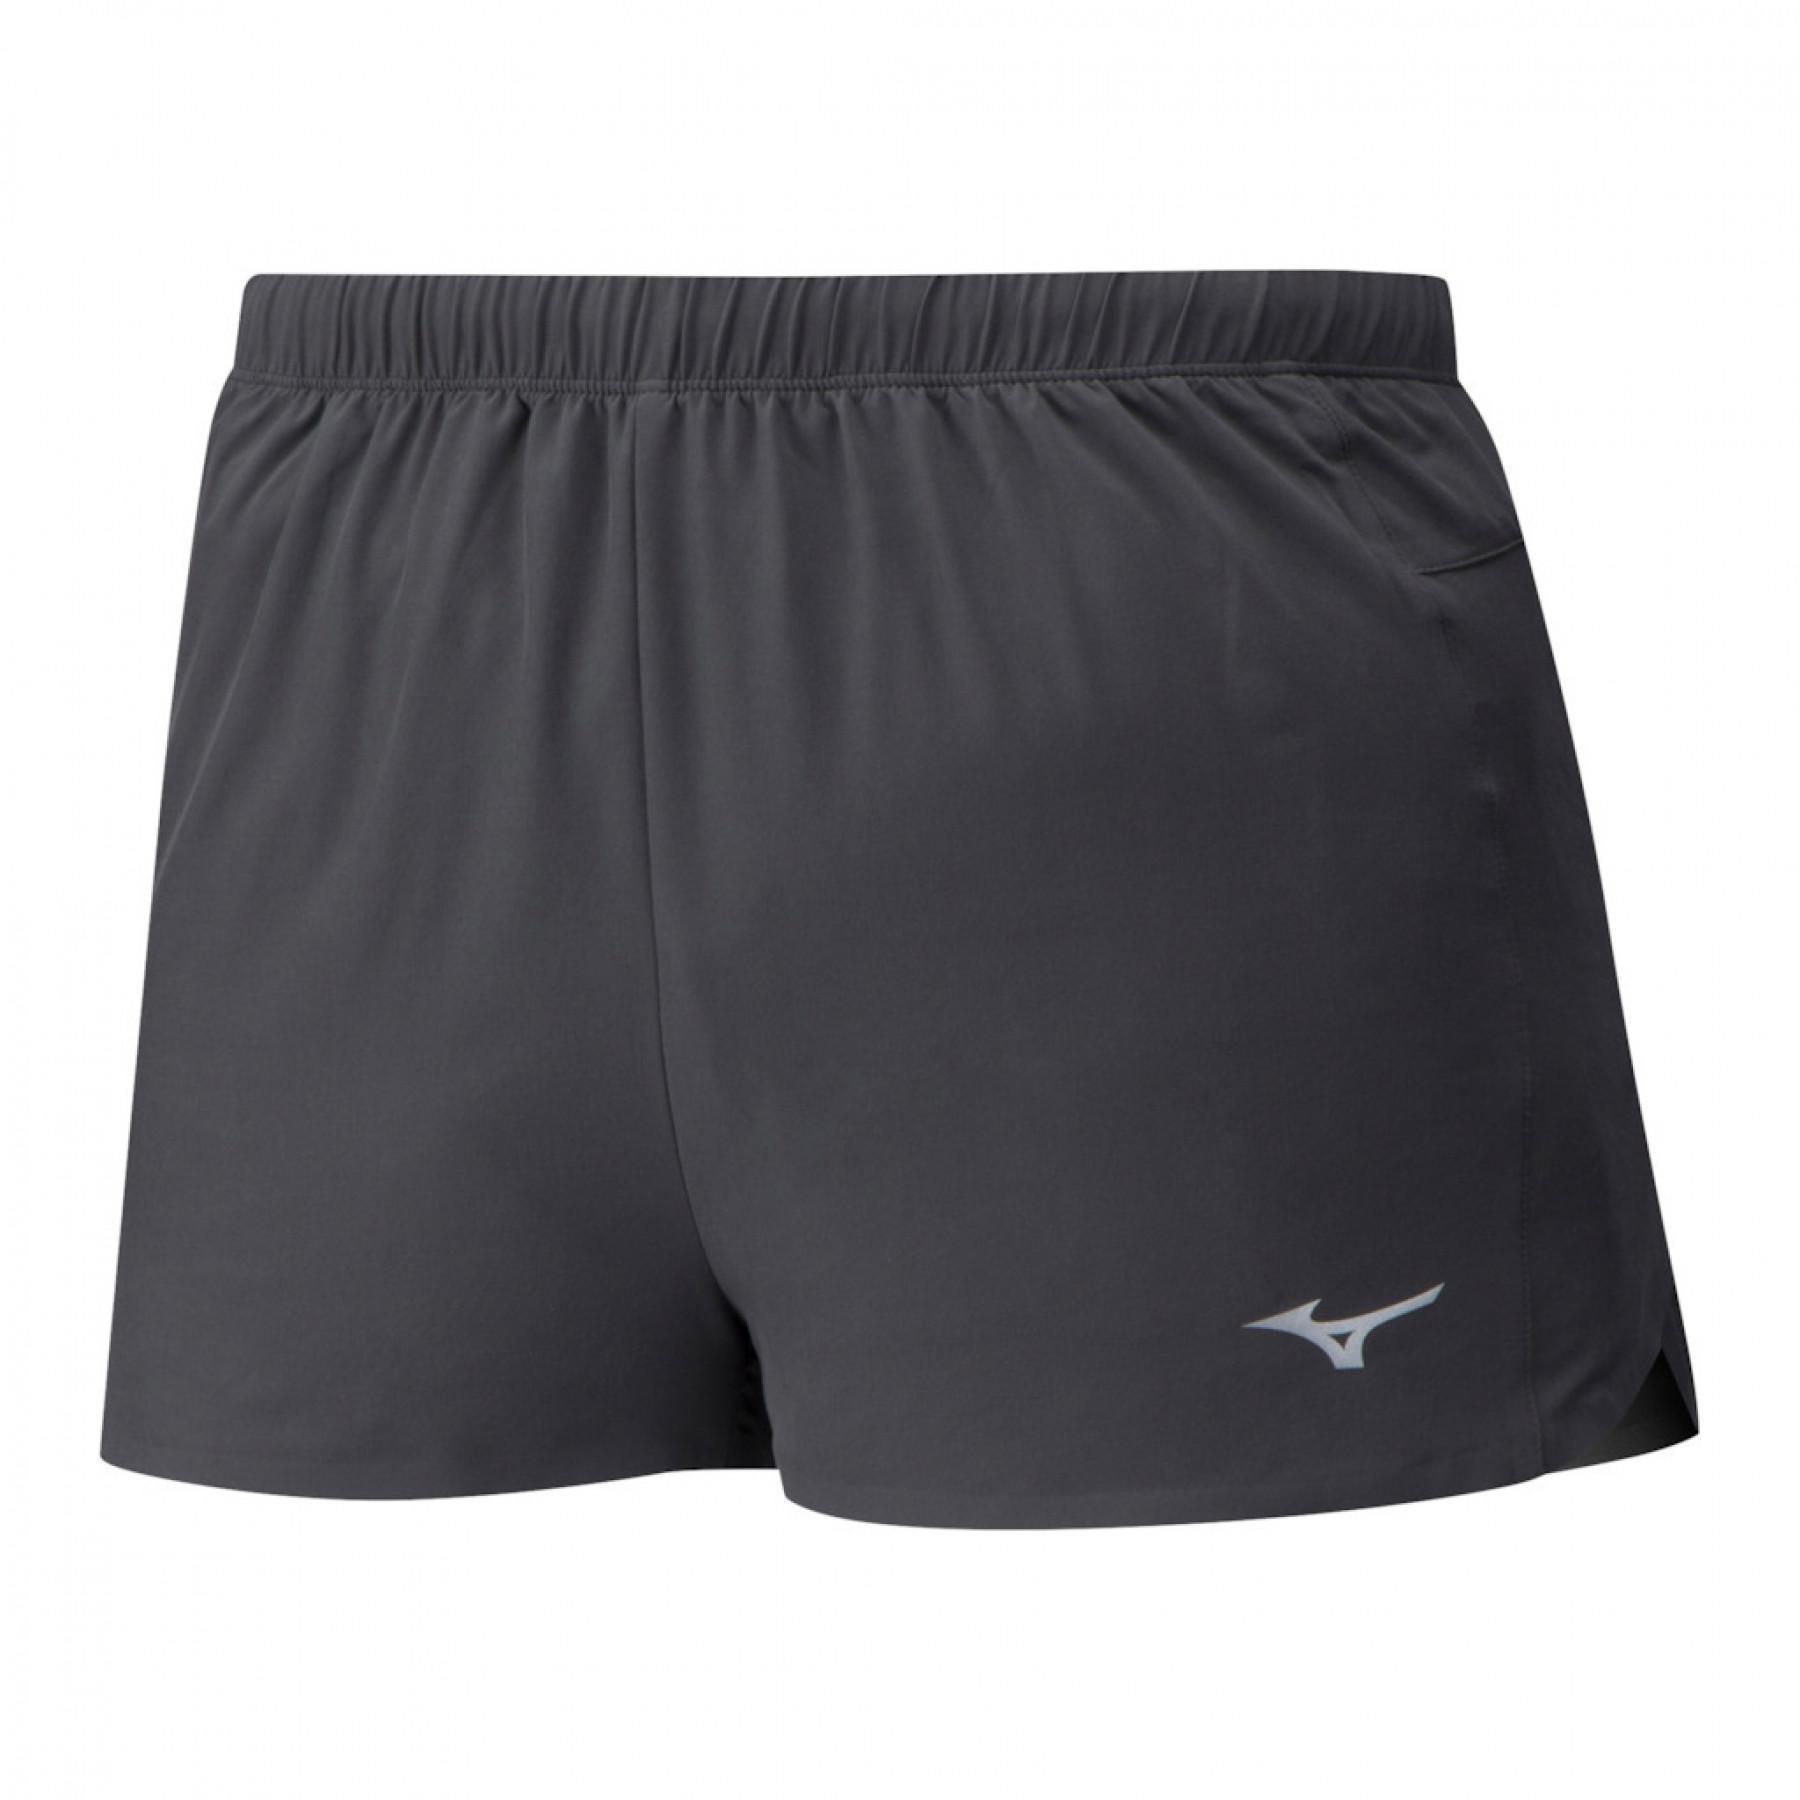 Muzino Aero Spilt Shorts 1,5